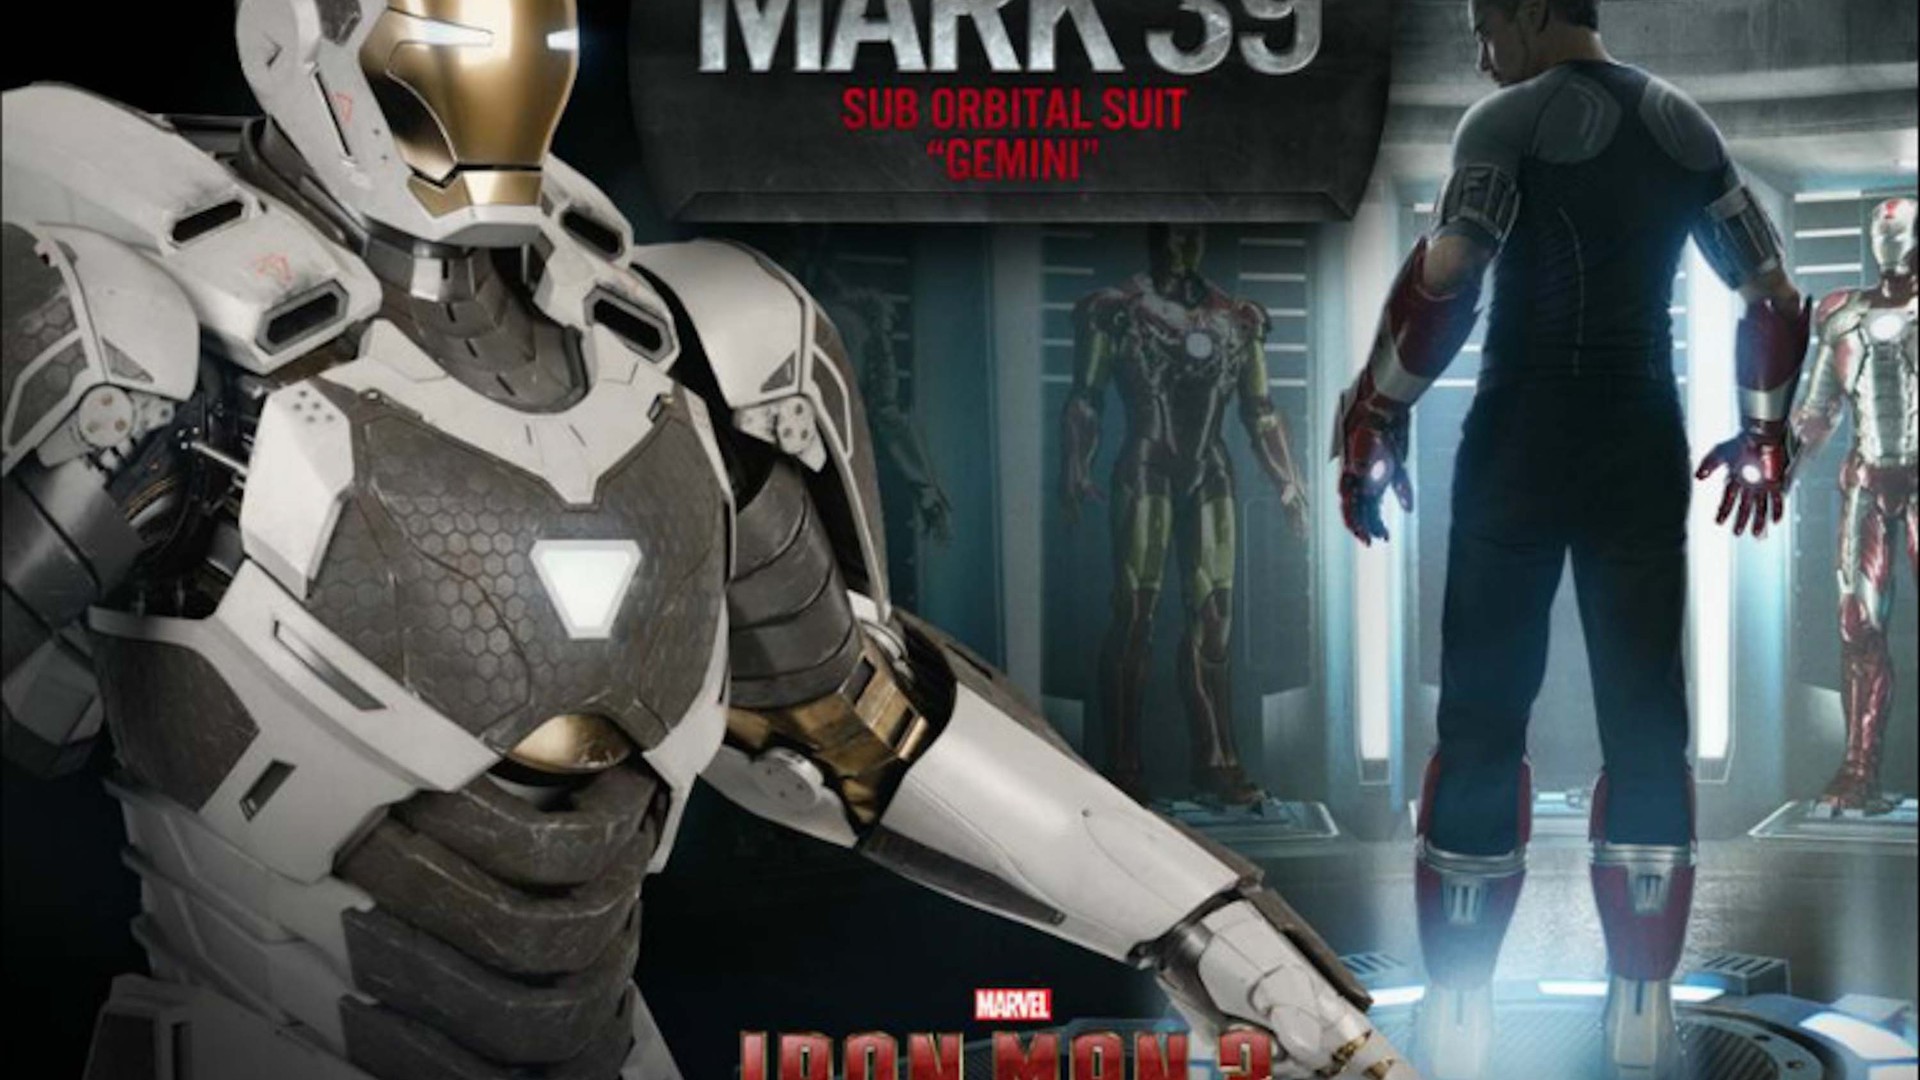 iron man mark 6 wallpaper